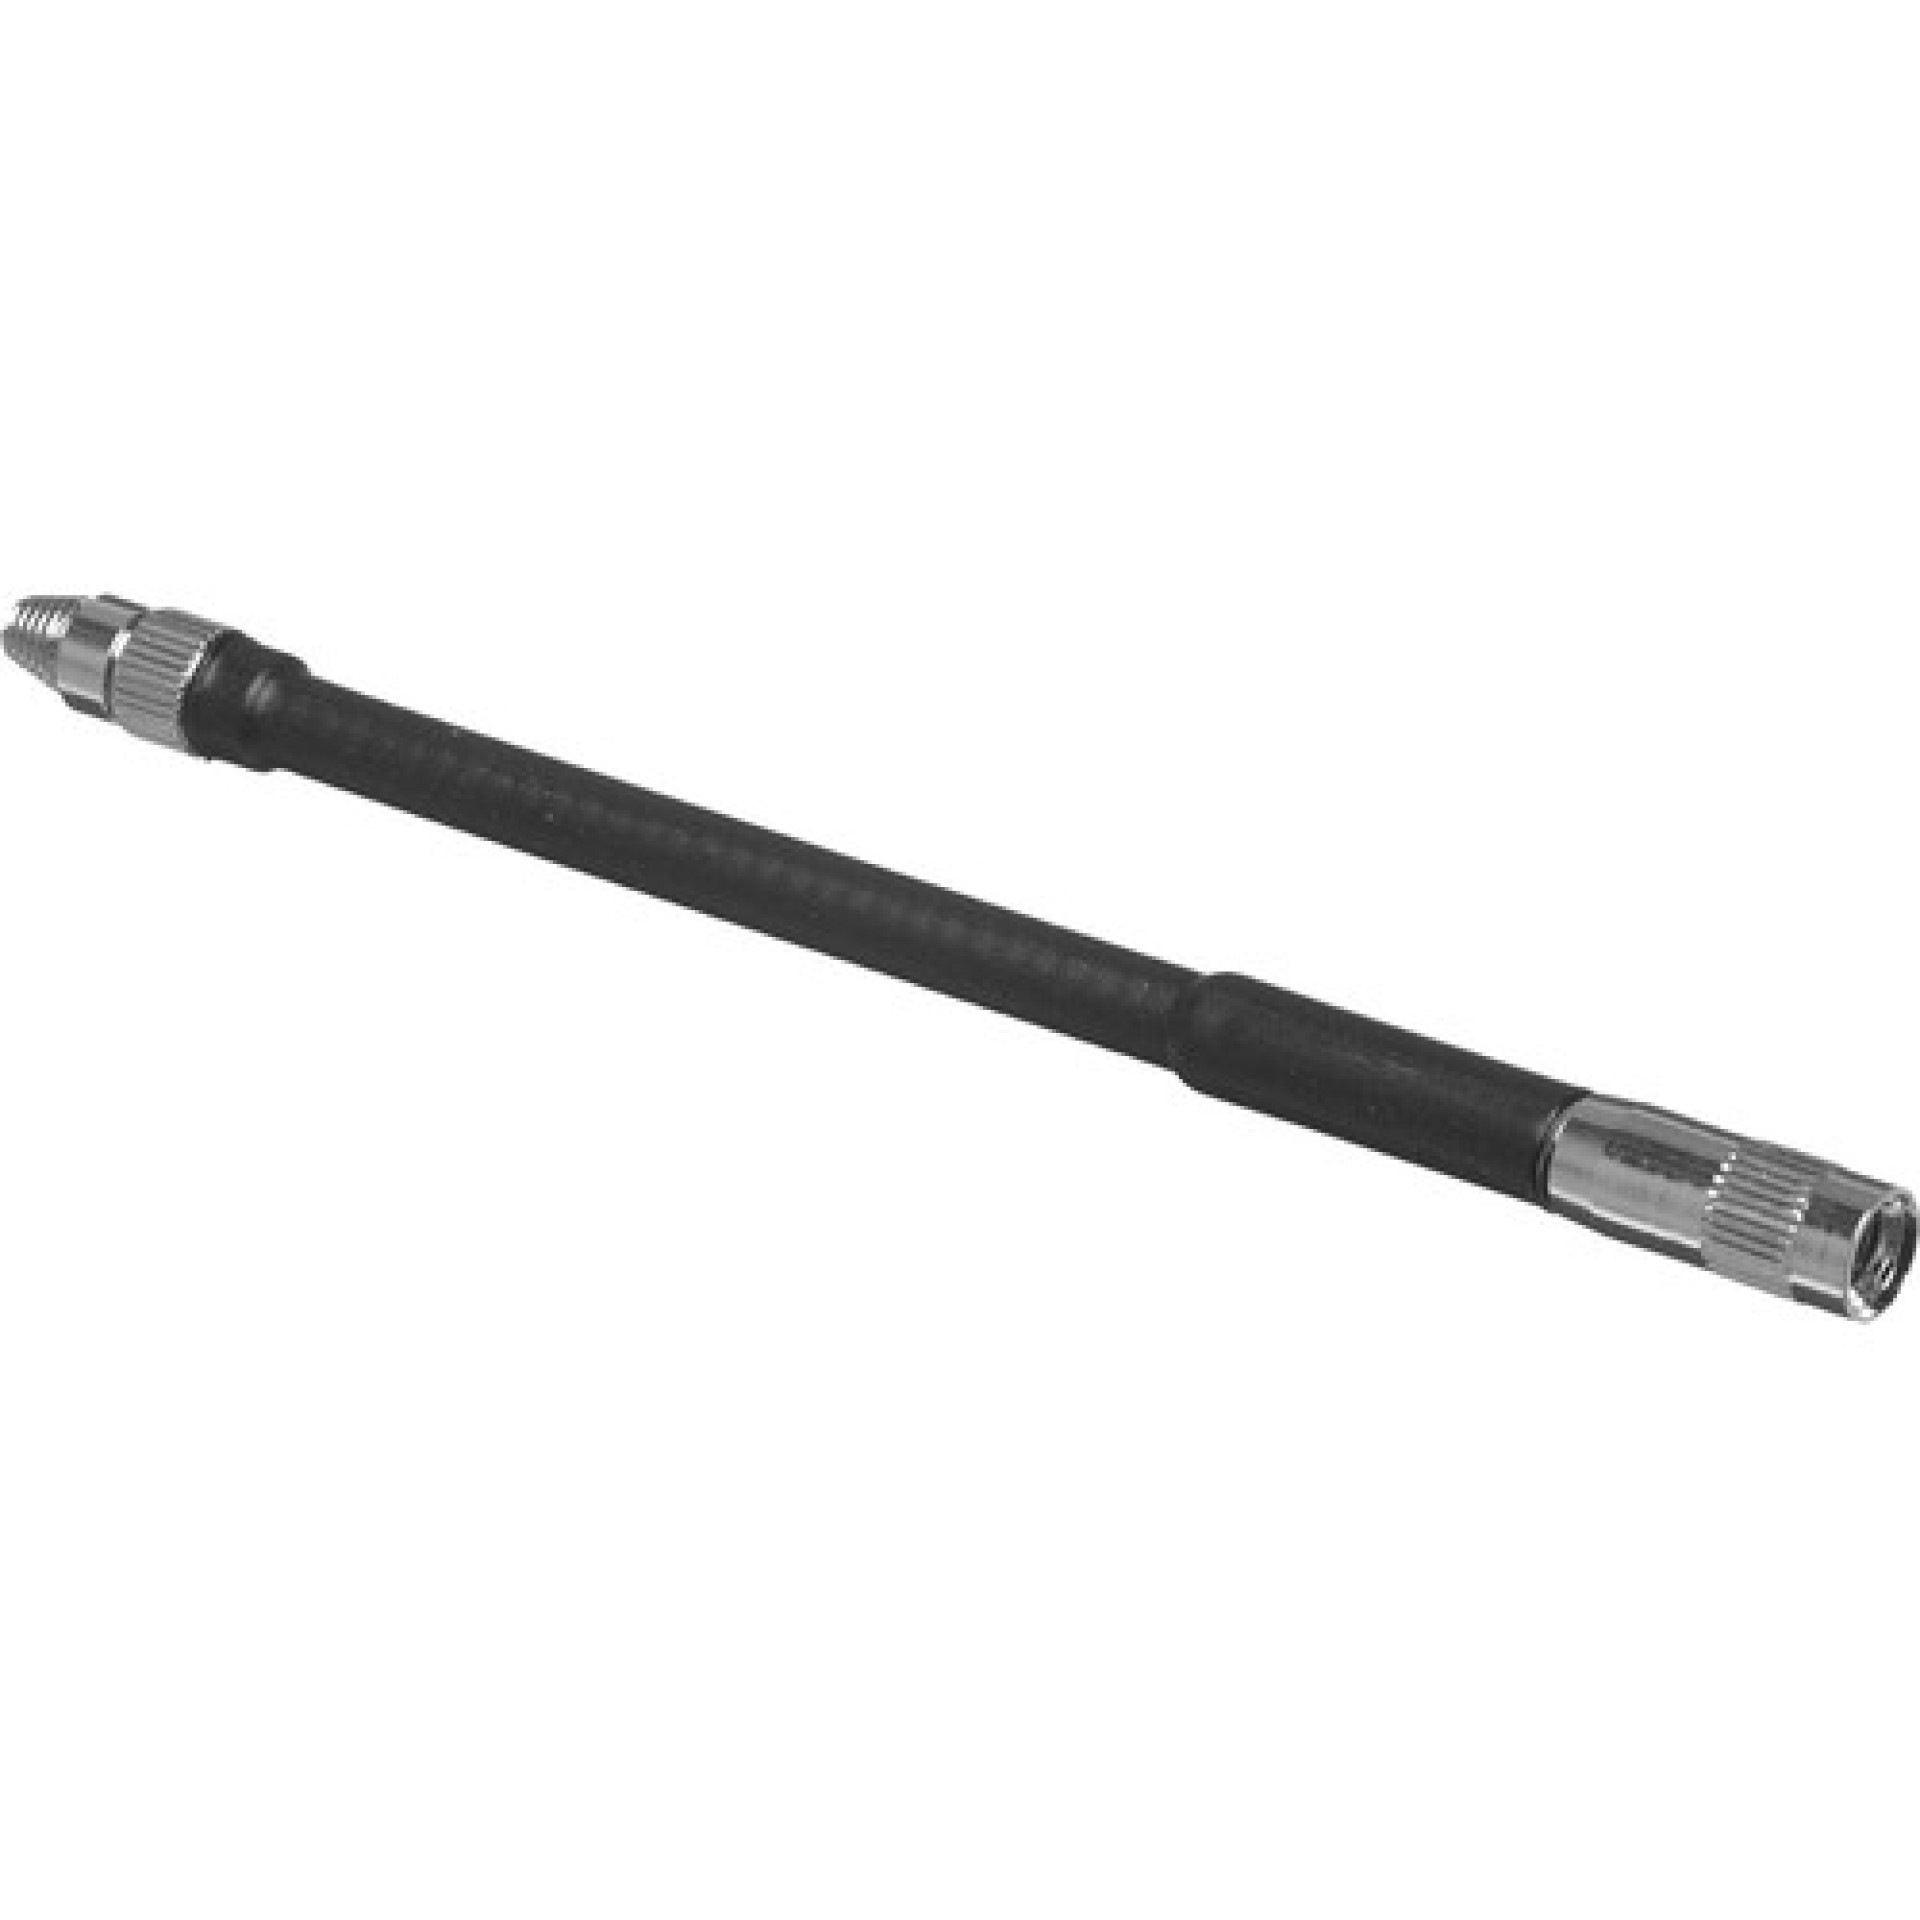 Gepe 3.25" (8.3 cm) Flexible Cable Release Extension